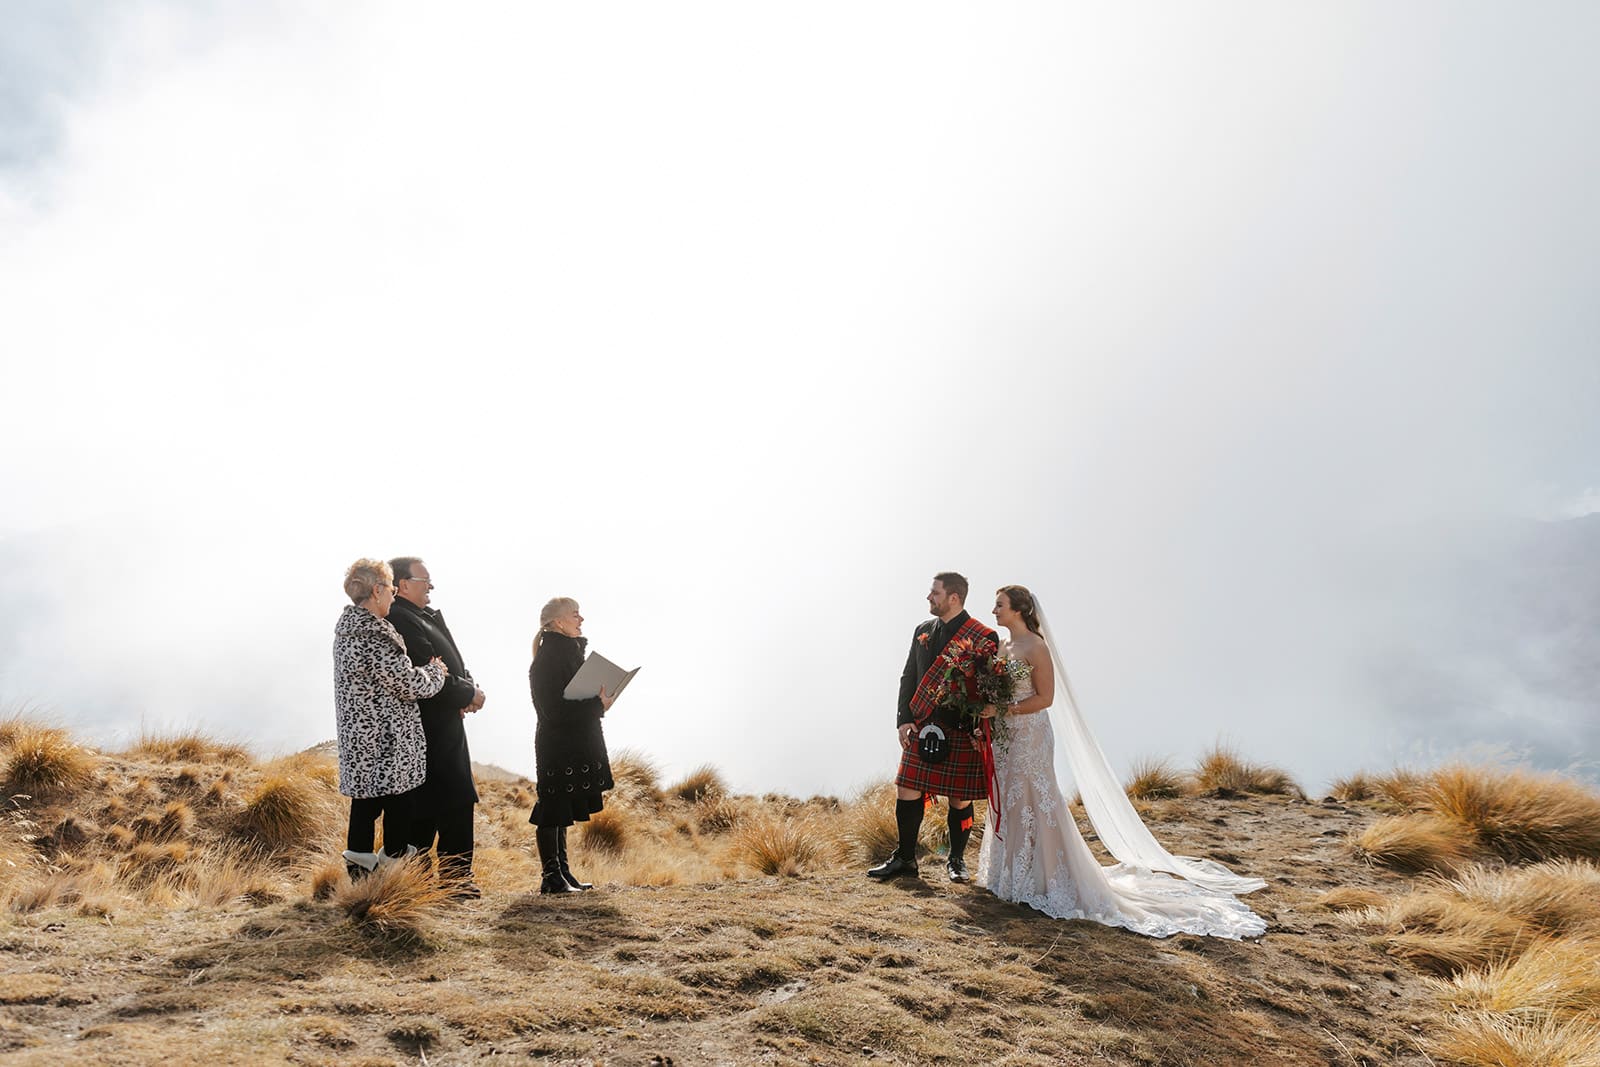 Scottish themed Heli Wedding on Coromandel Peak in Wanaka